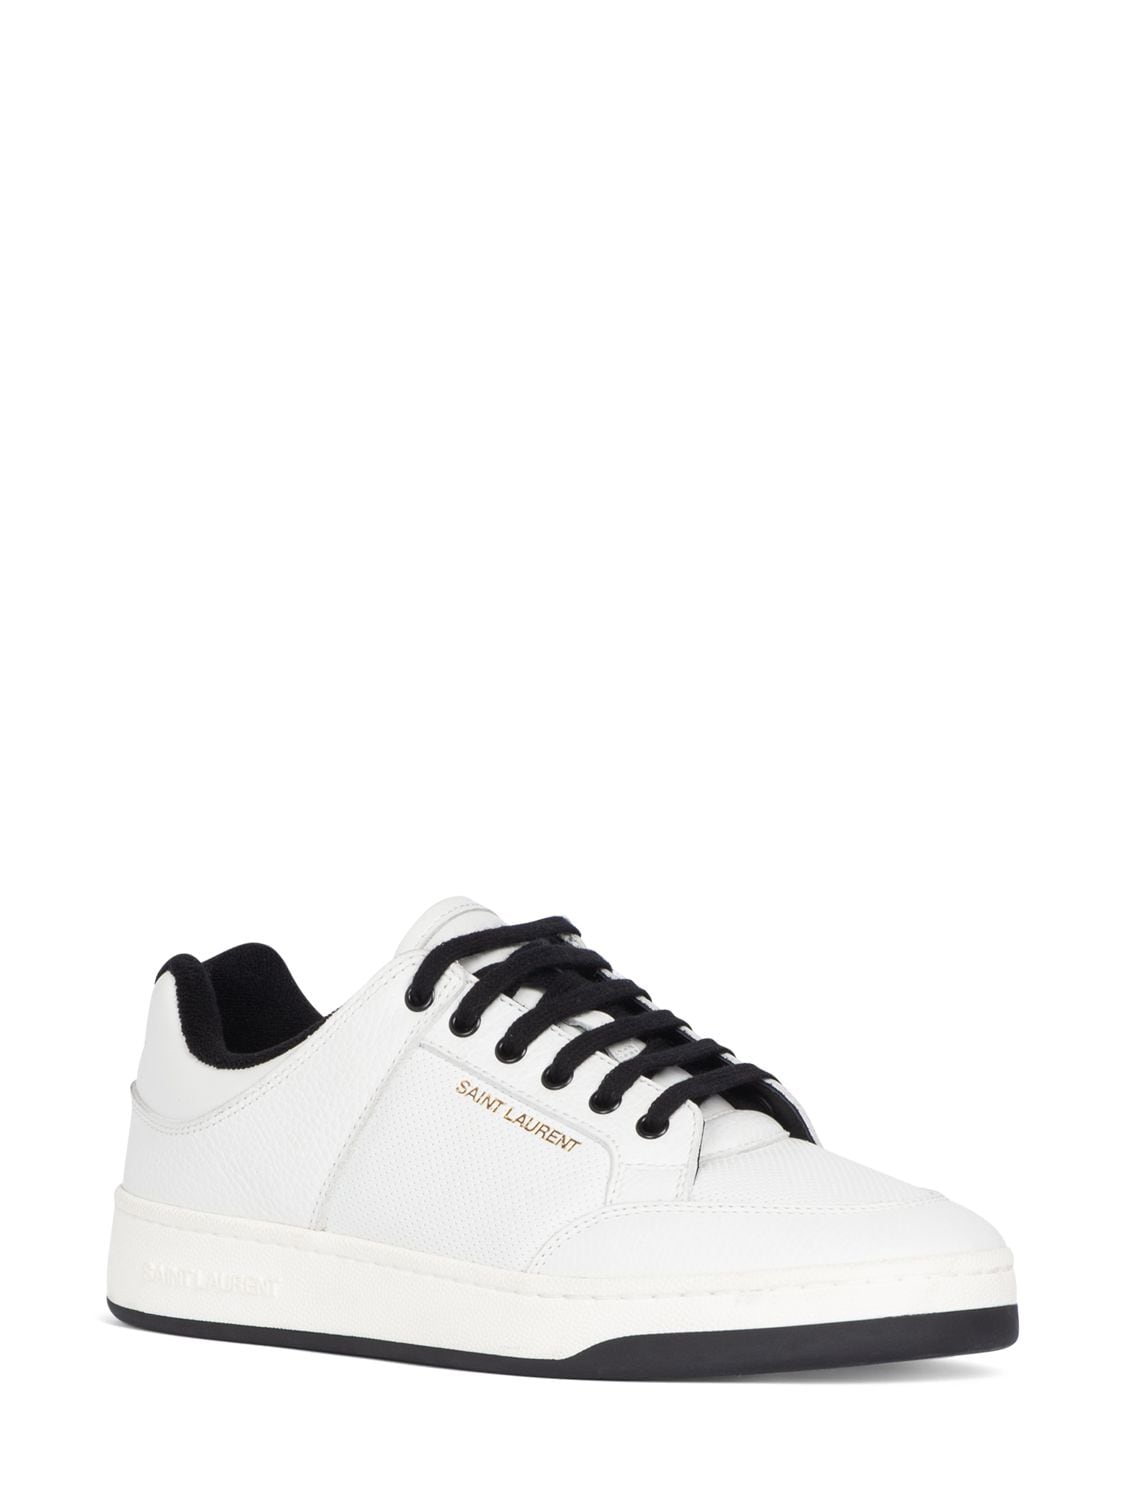 Shop Saint Laurent Sl/61 Leather Sneakers In White,black